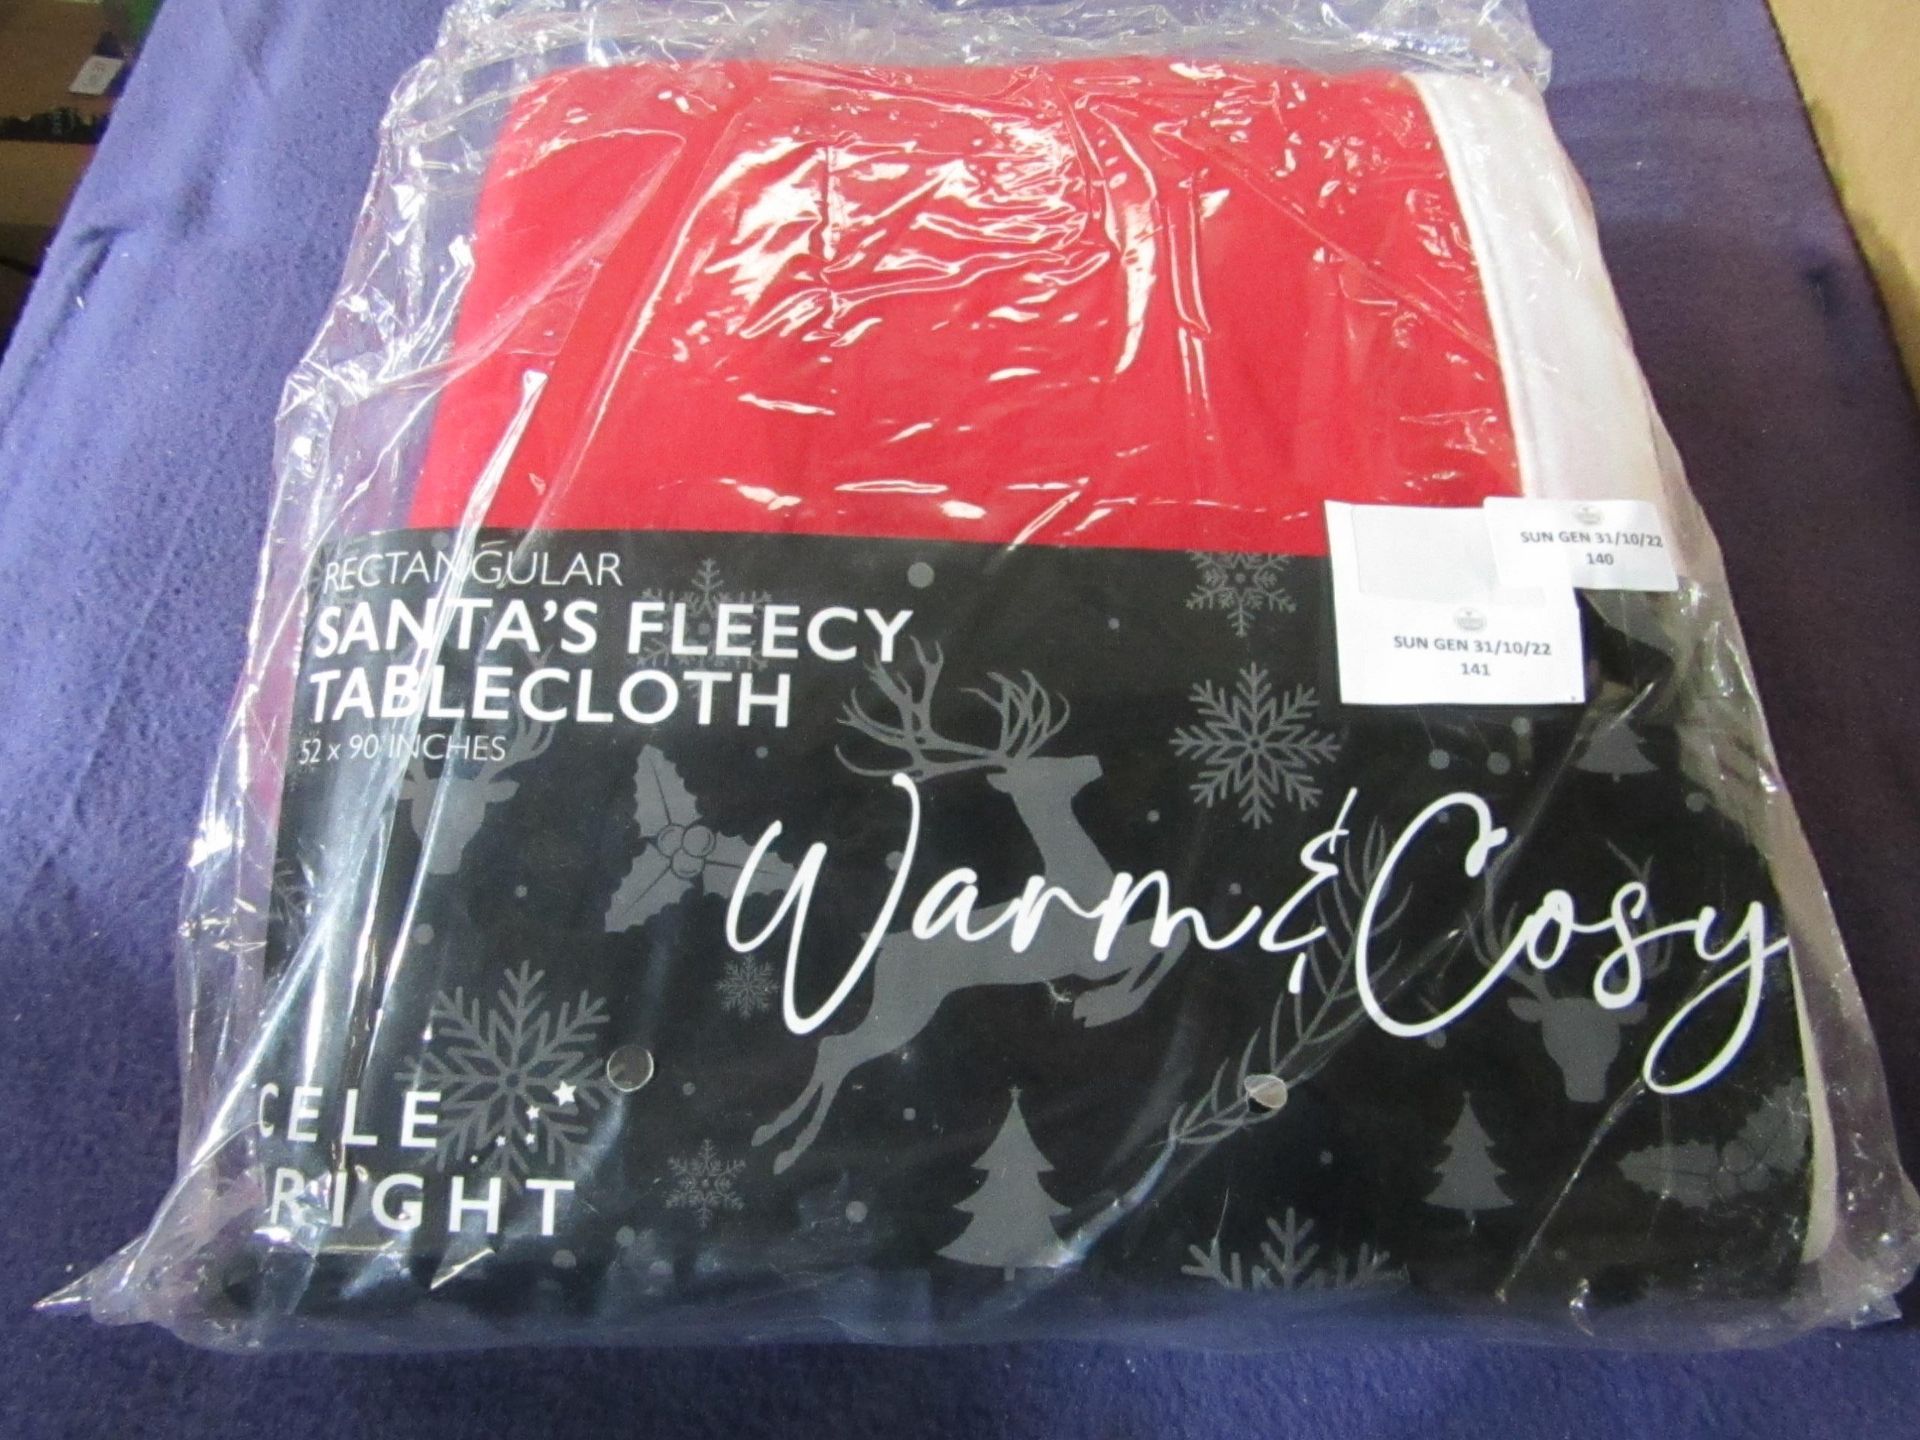 Celebright - Rectangular Santa's Fleecy Tablecloth - 52x90" - Unused & Packaged.